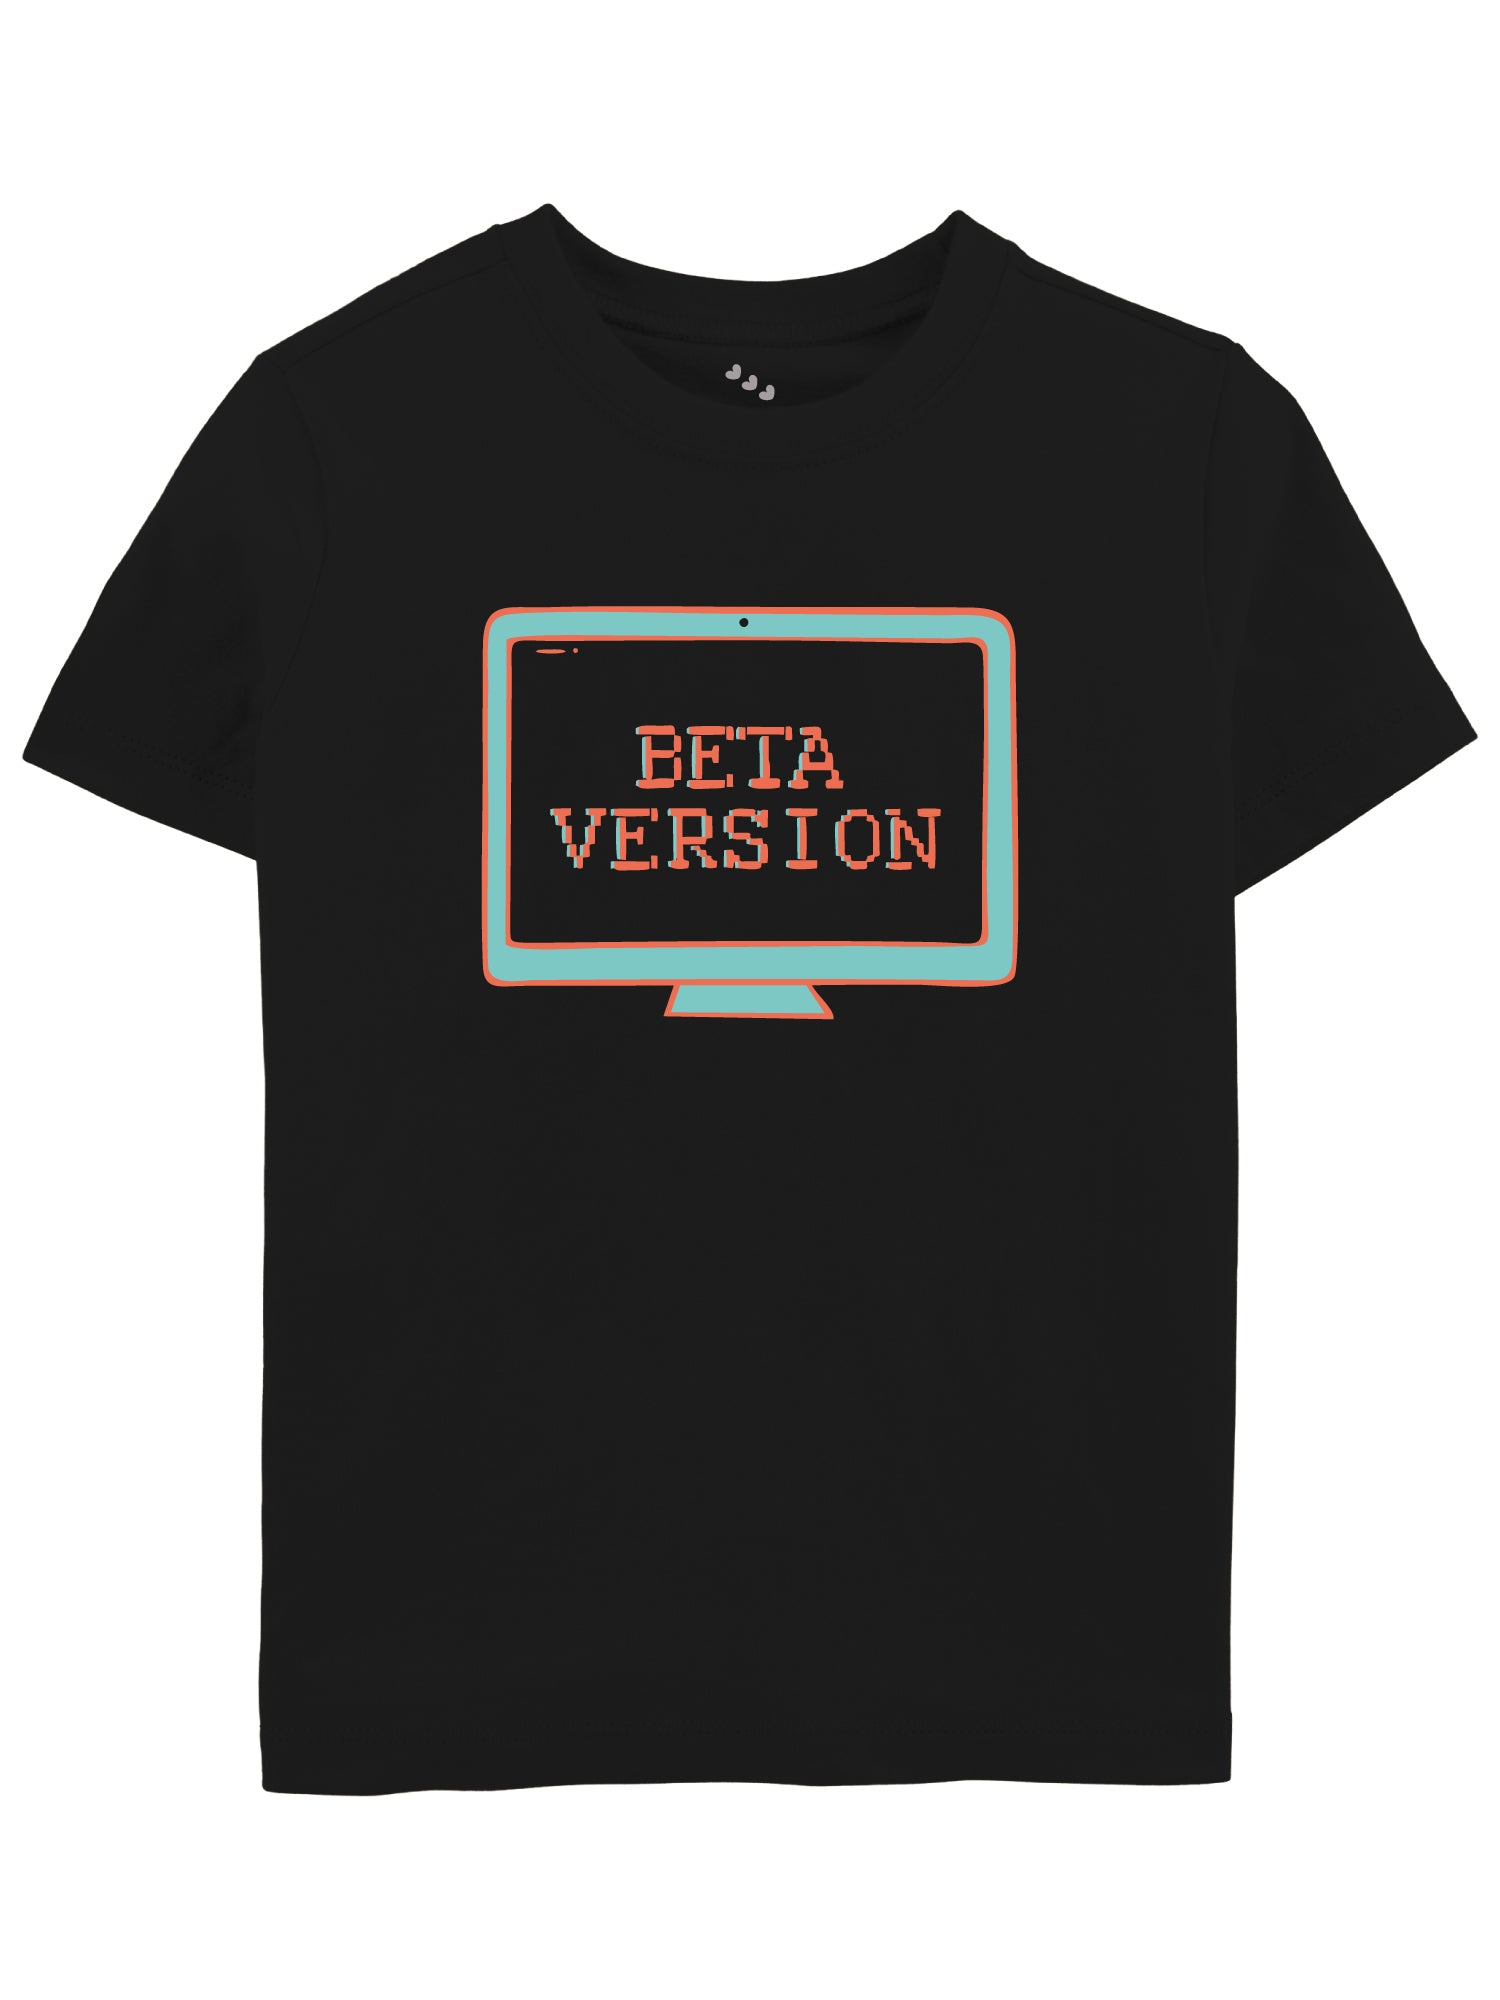 BETA version - Tee